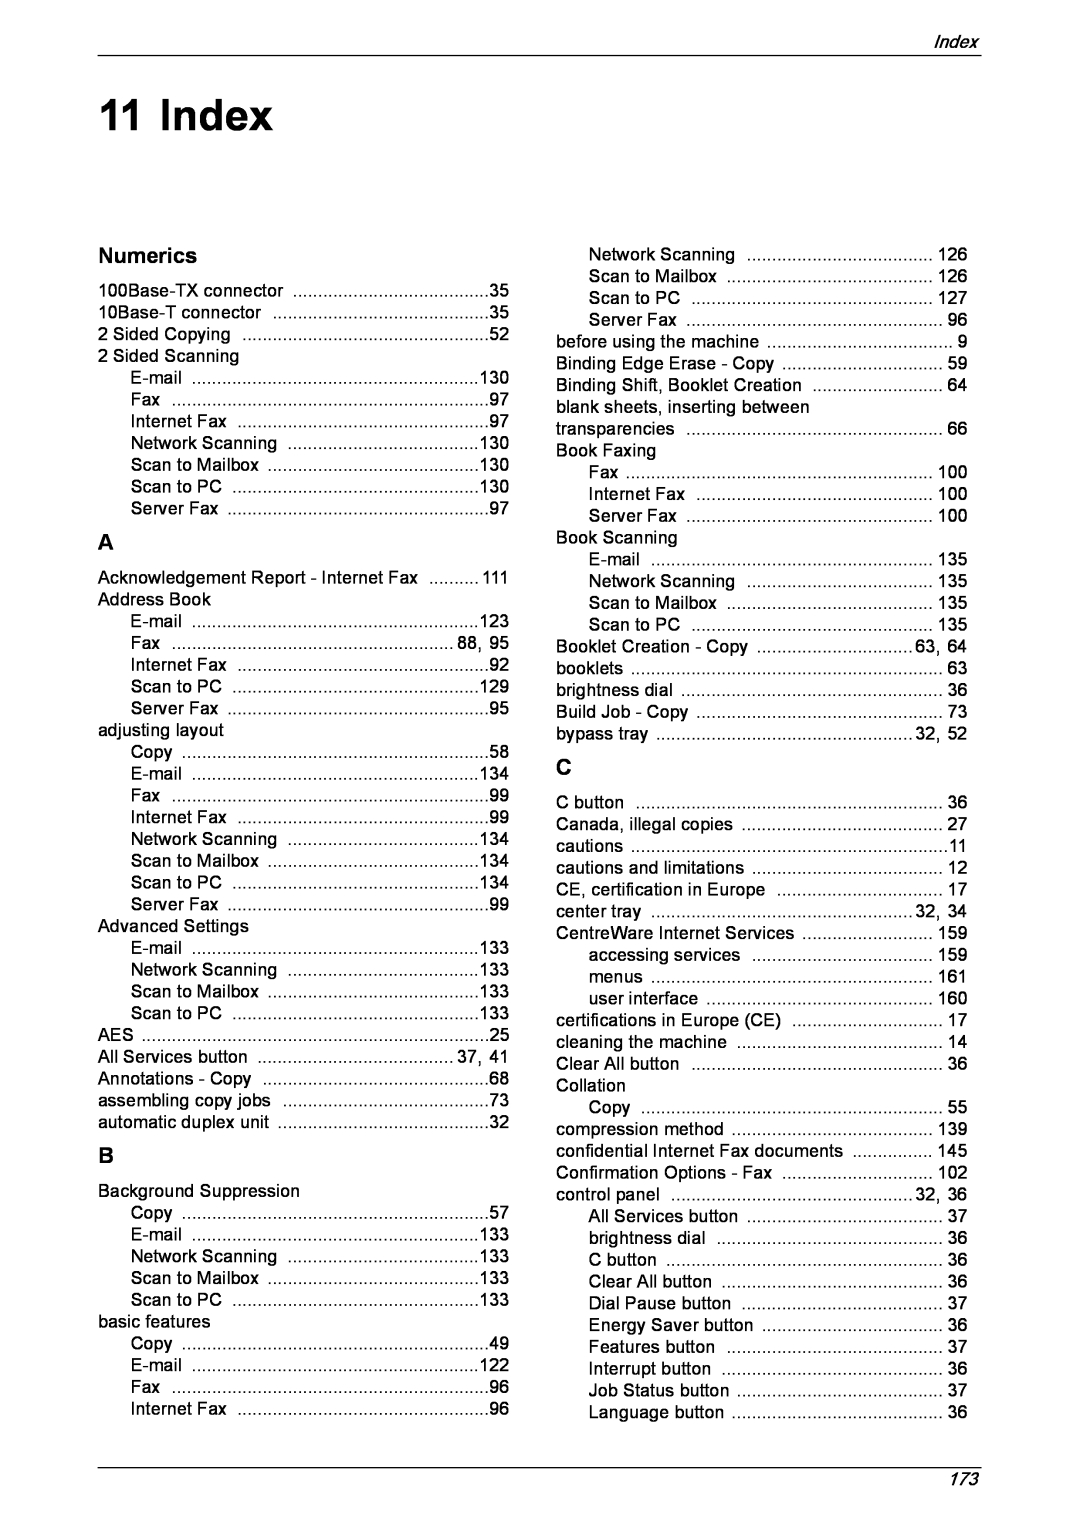 Xerox 5230 manual Index, Numerics 